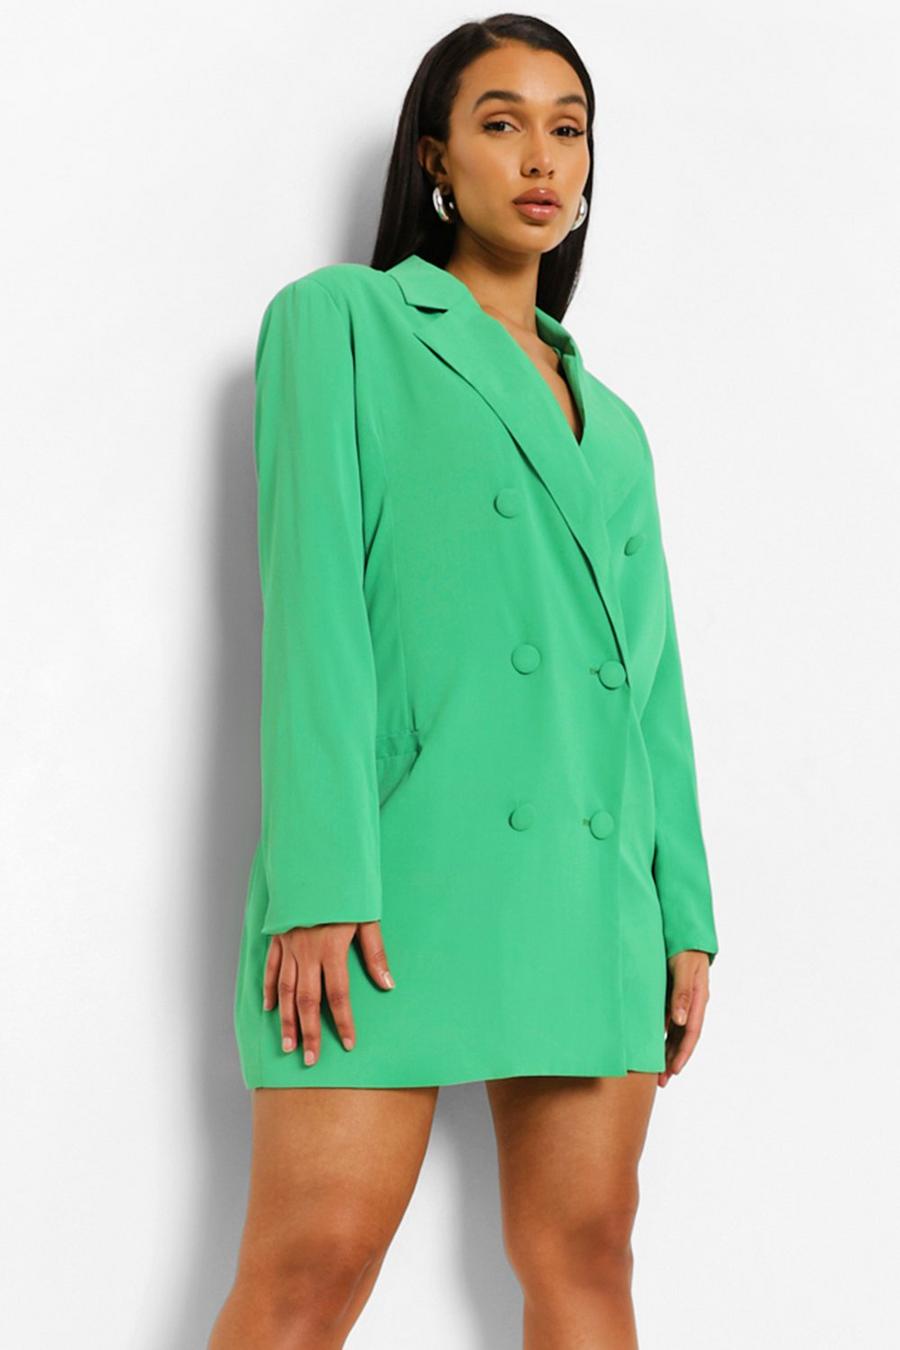 Bright green Oversized Tailored Blazer Dress